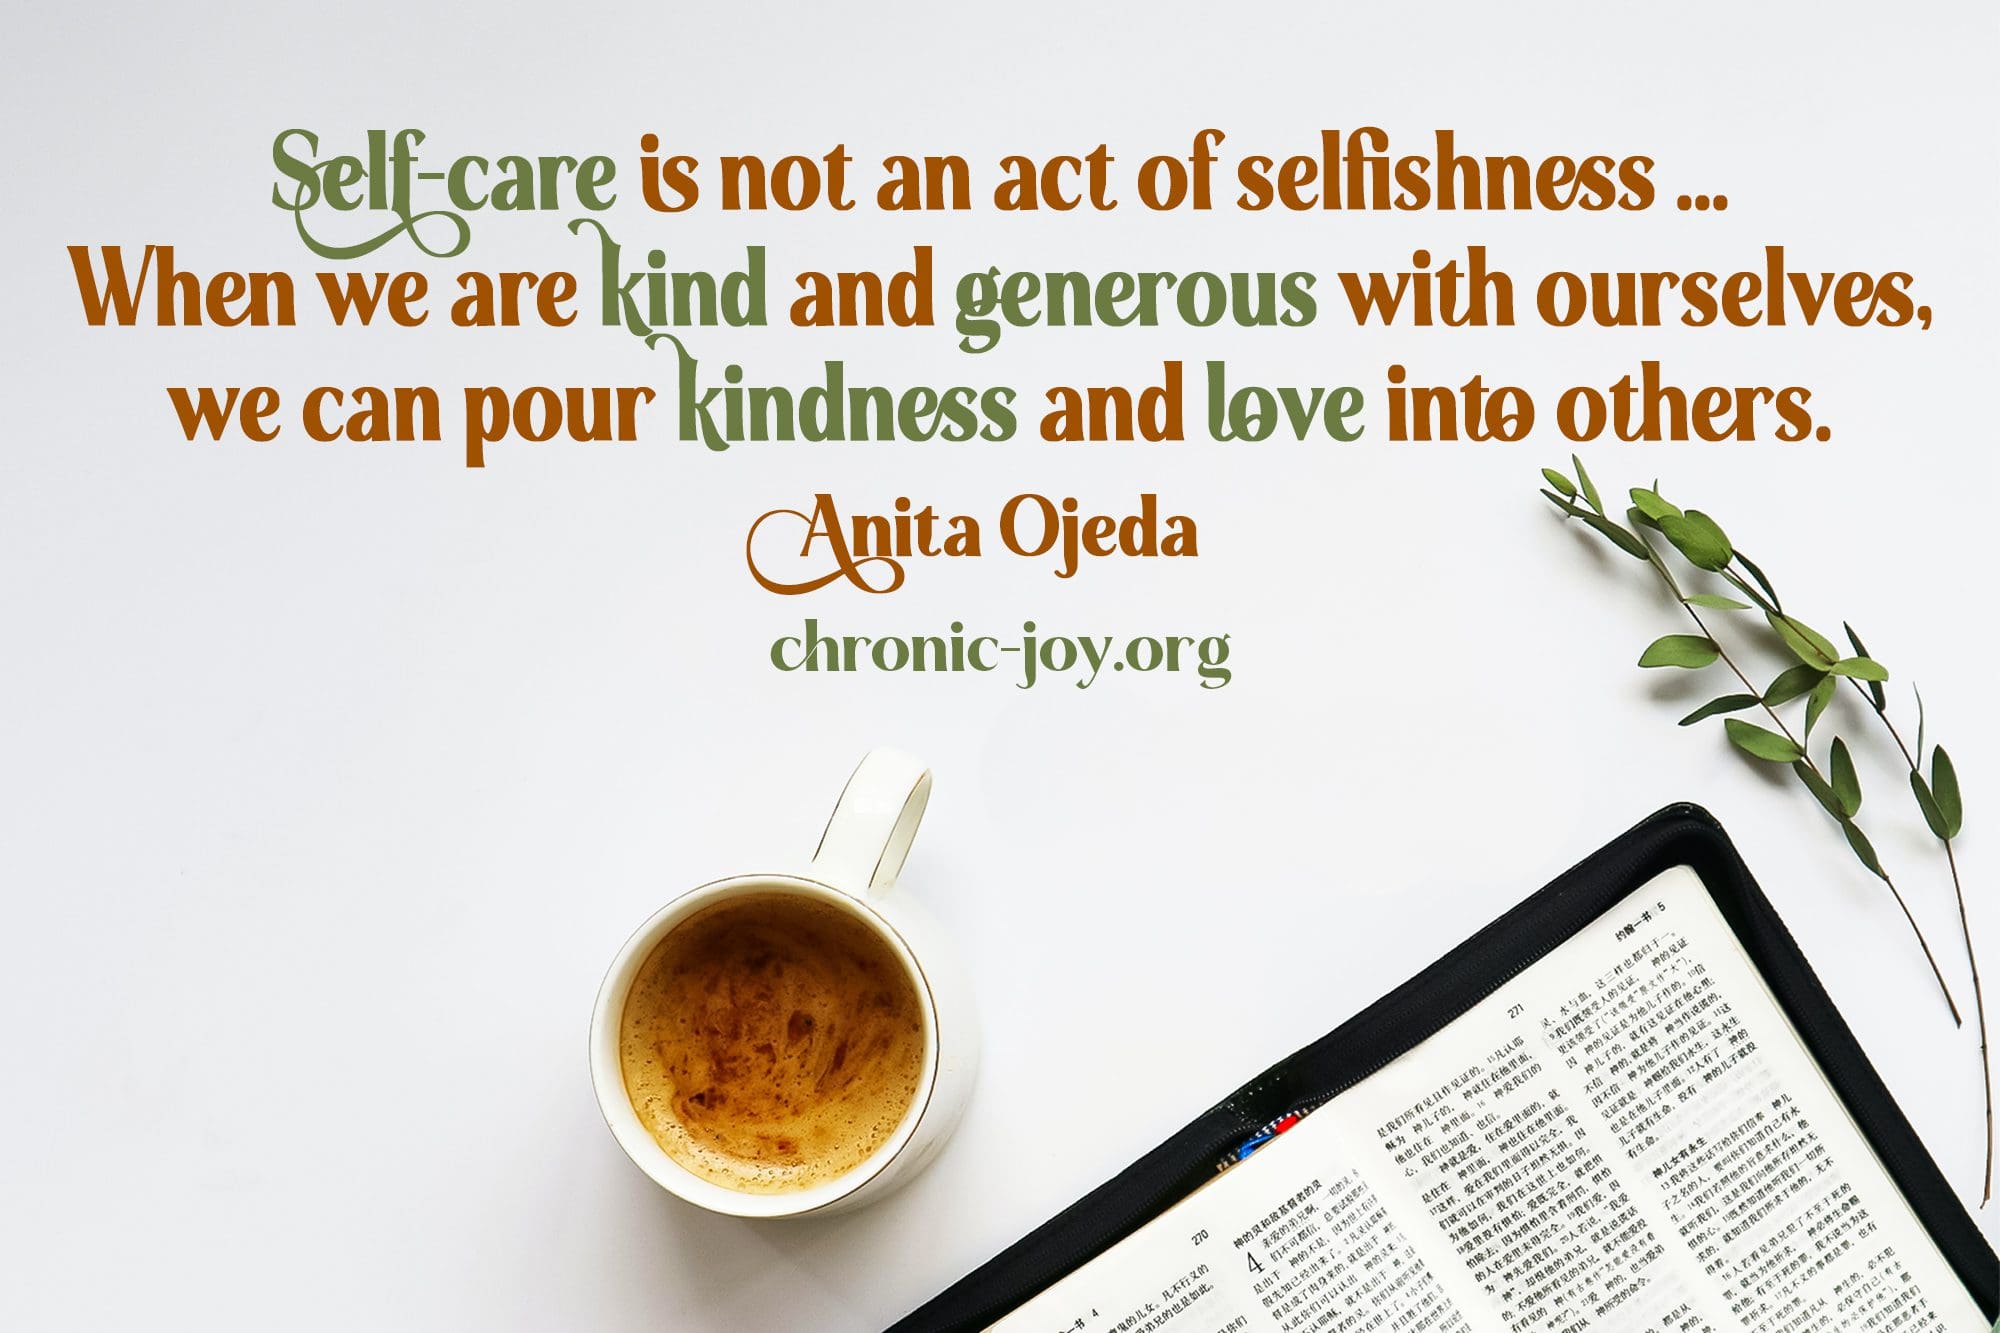 Truekind - Remember, self-care isn't selfish; it's the